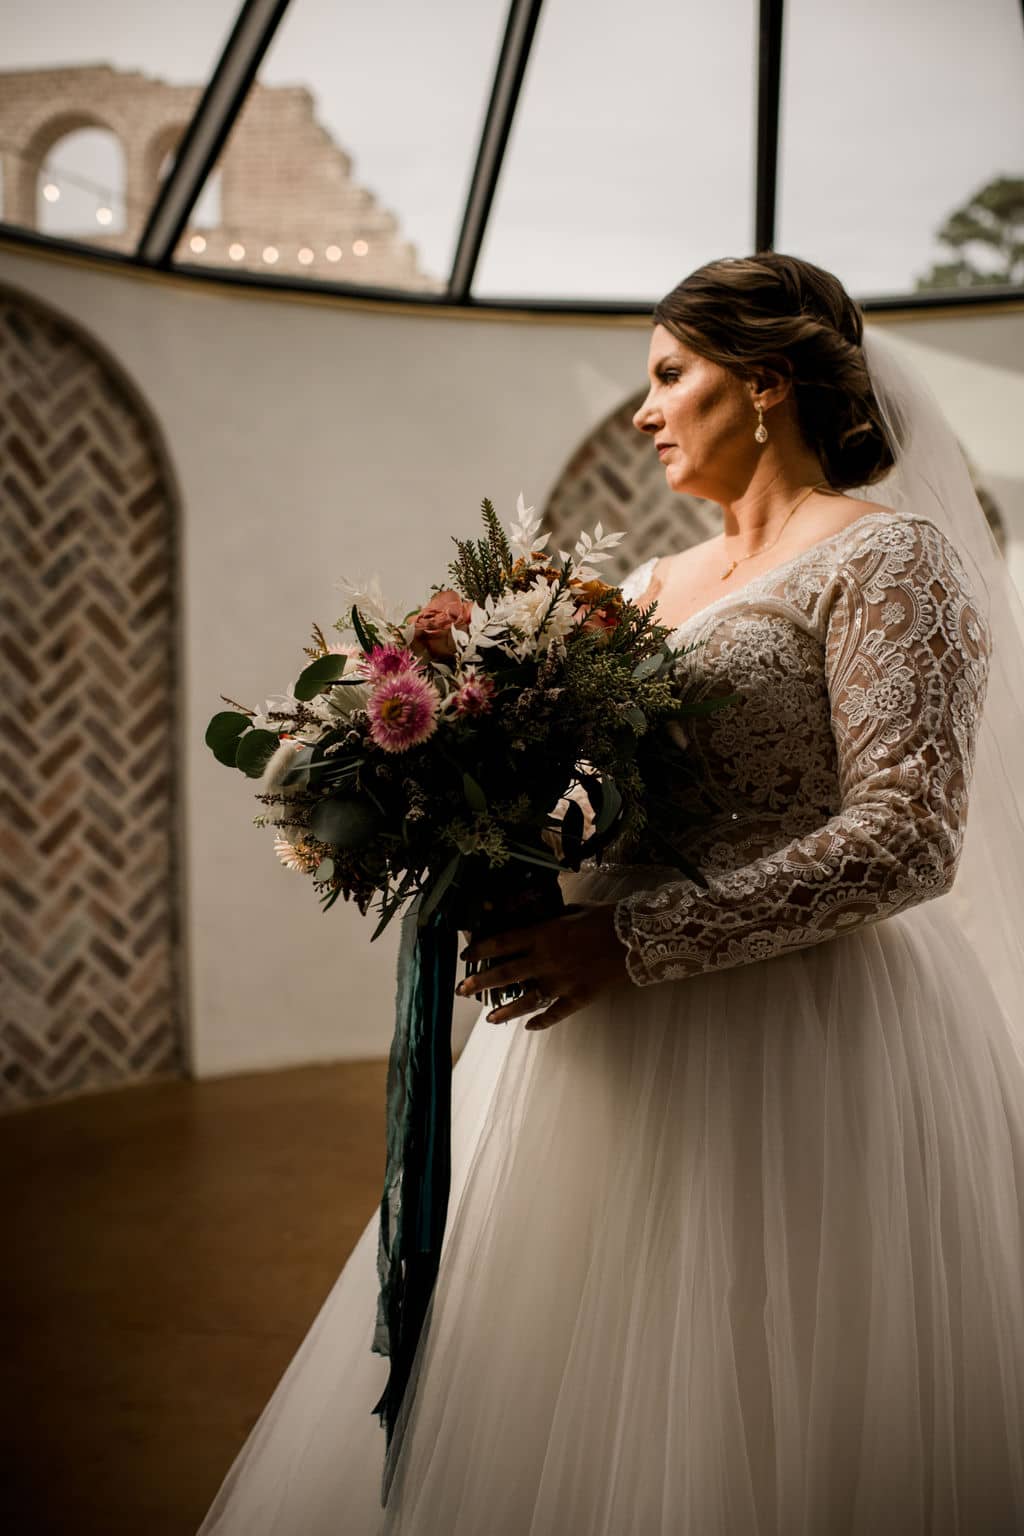 texas bride in her white wedding gown hoolding a floral arrangement by texas wedding florist urban rubbish